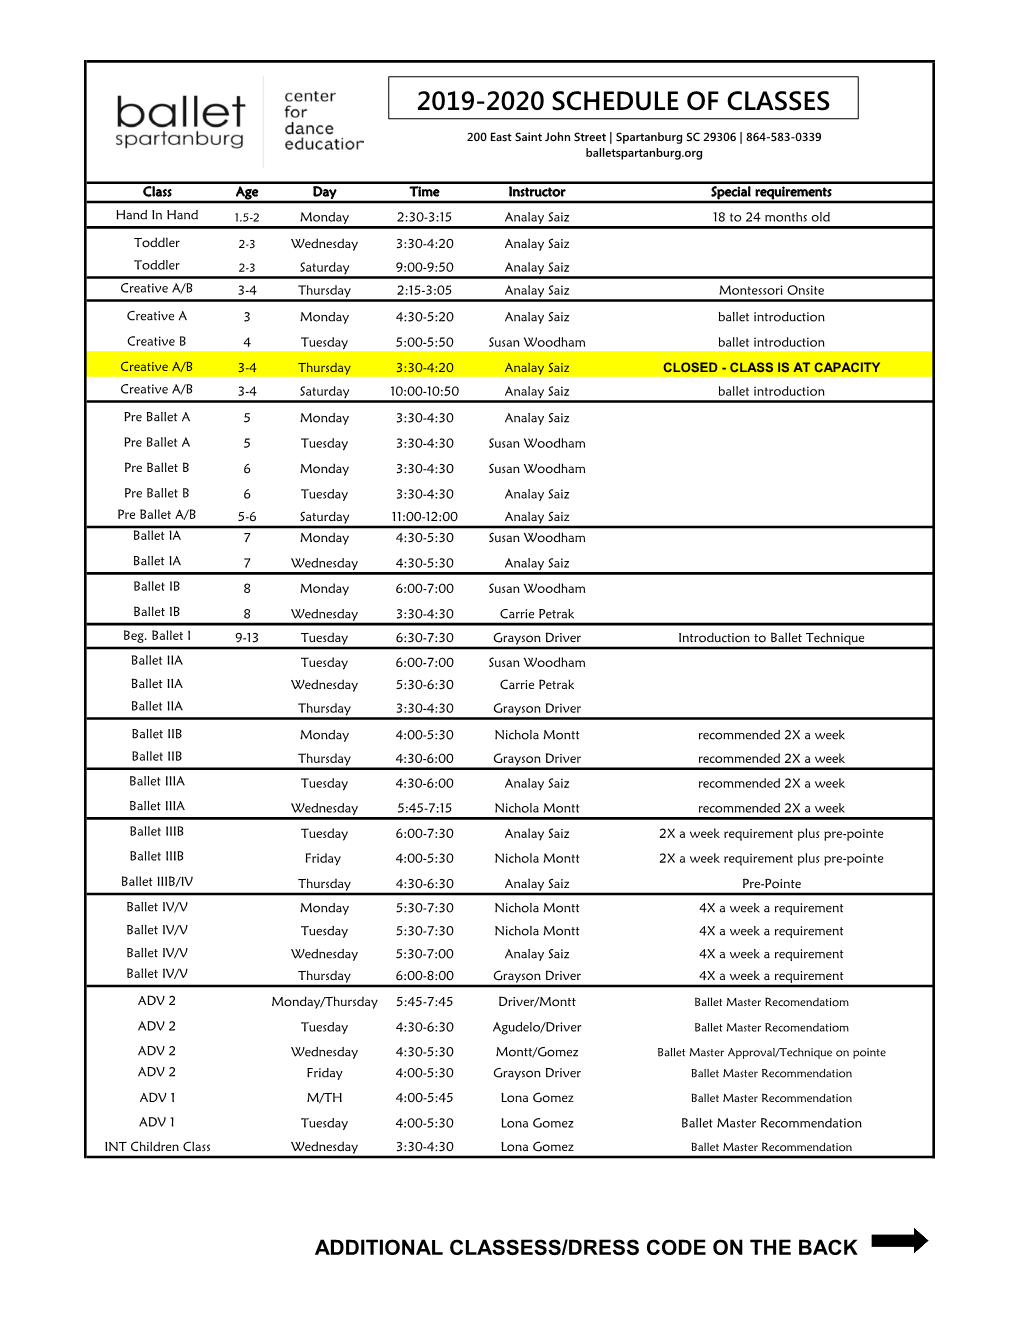 2019-2020 Schedule of Classes